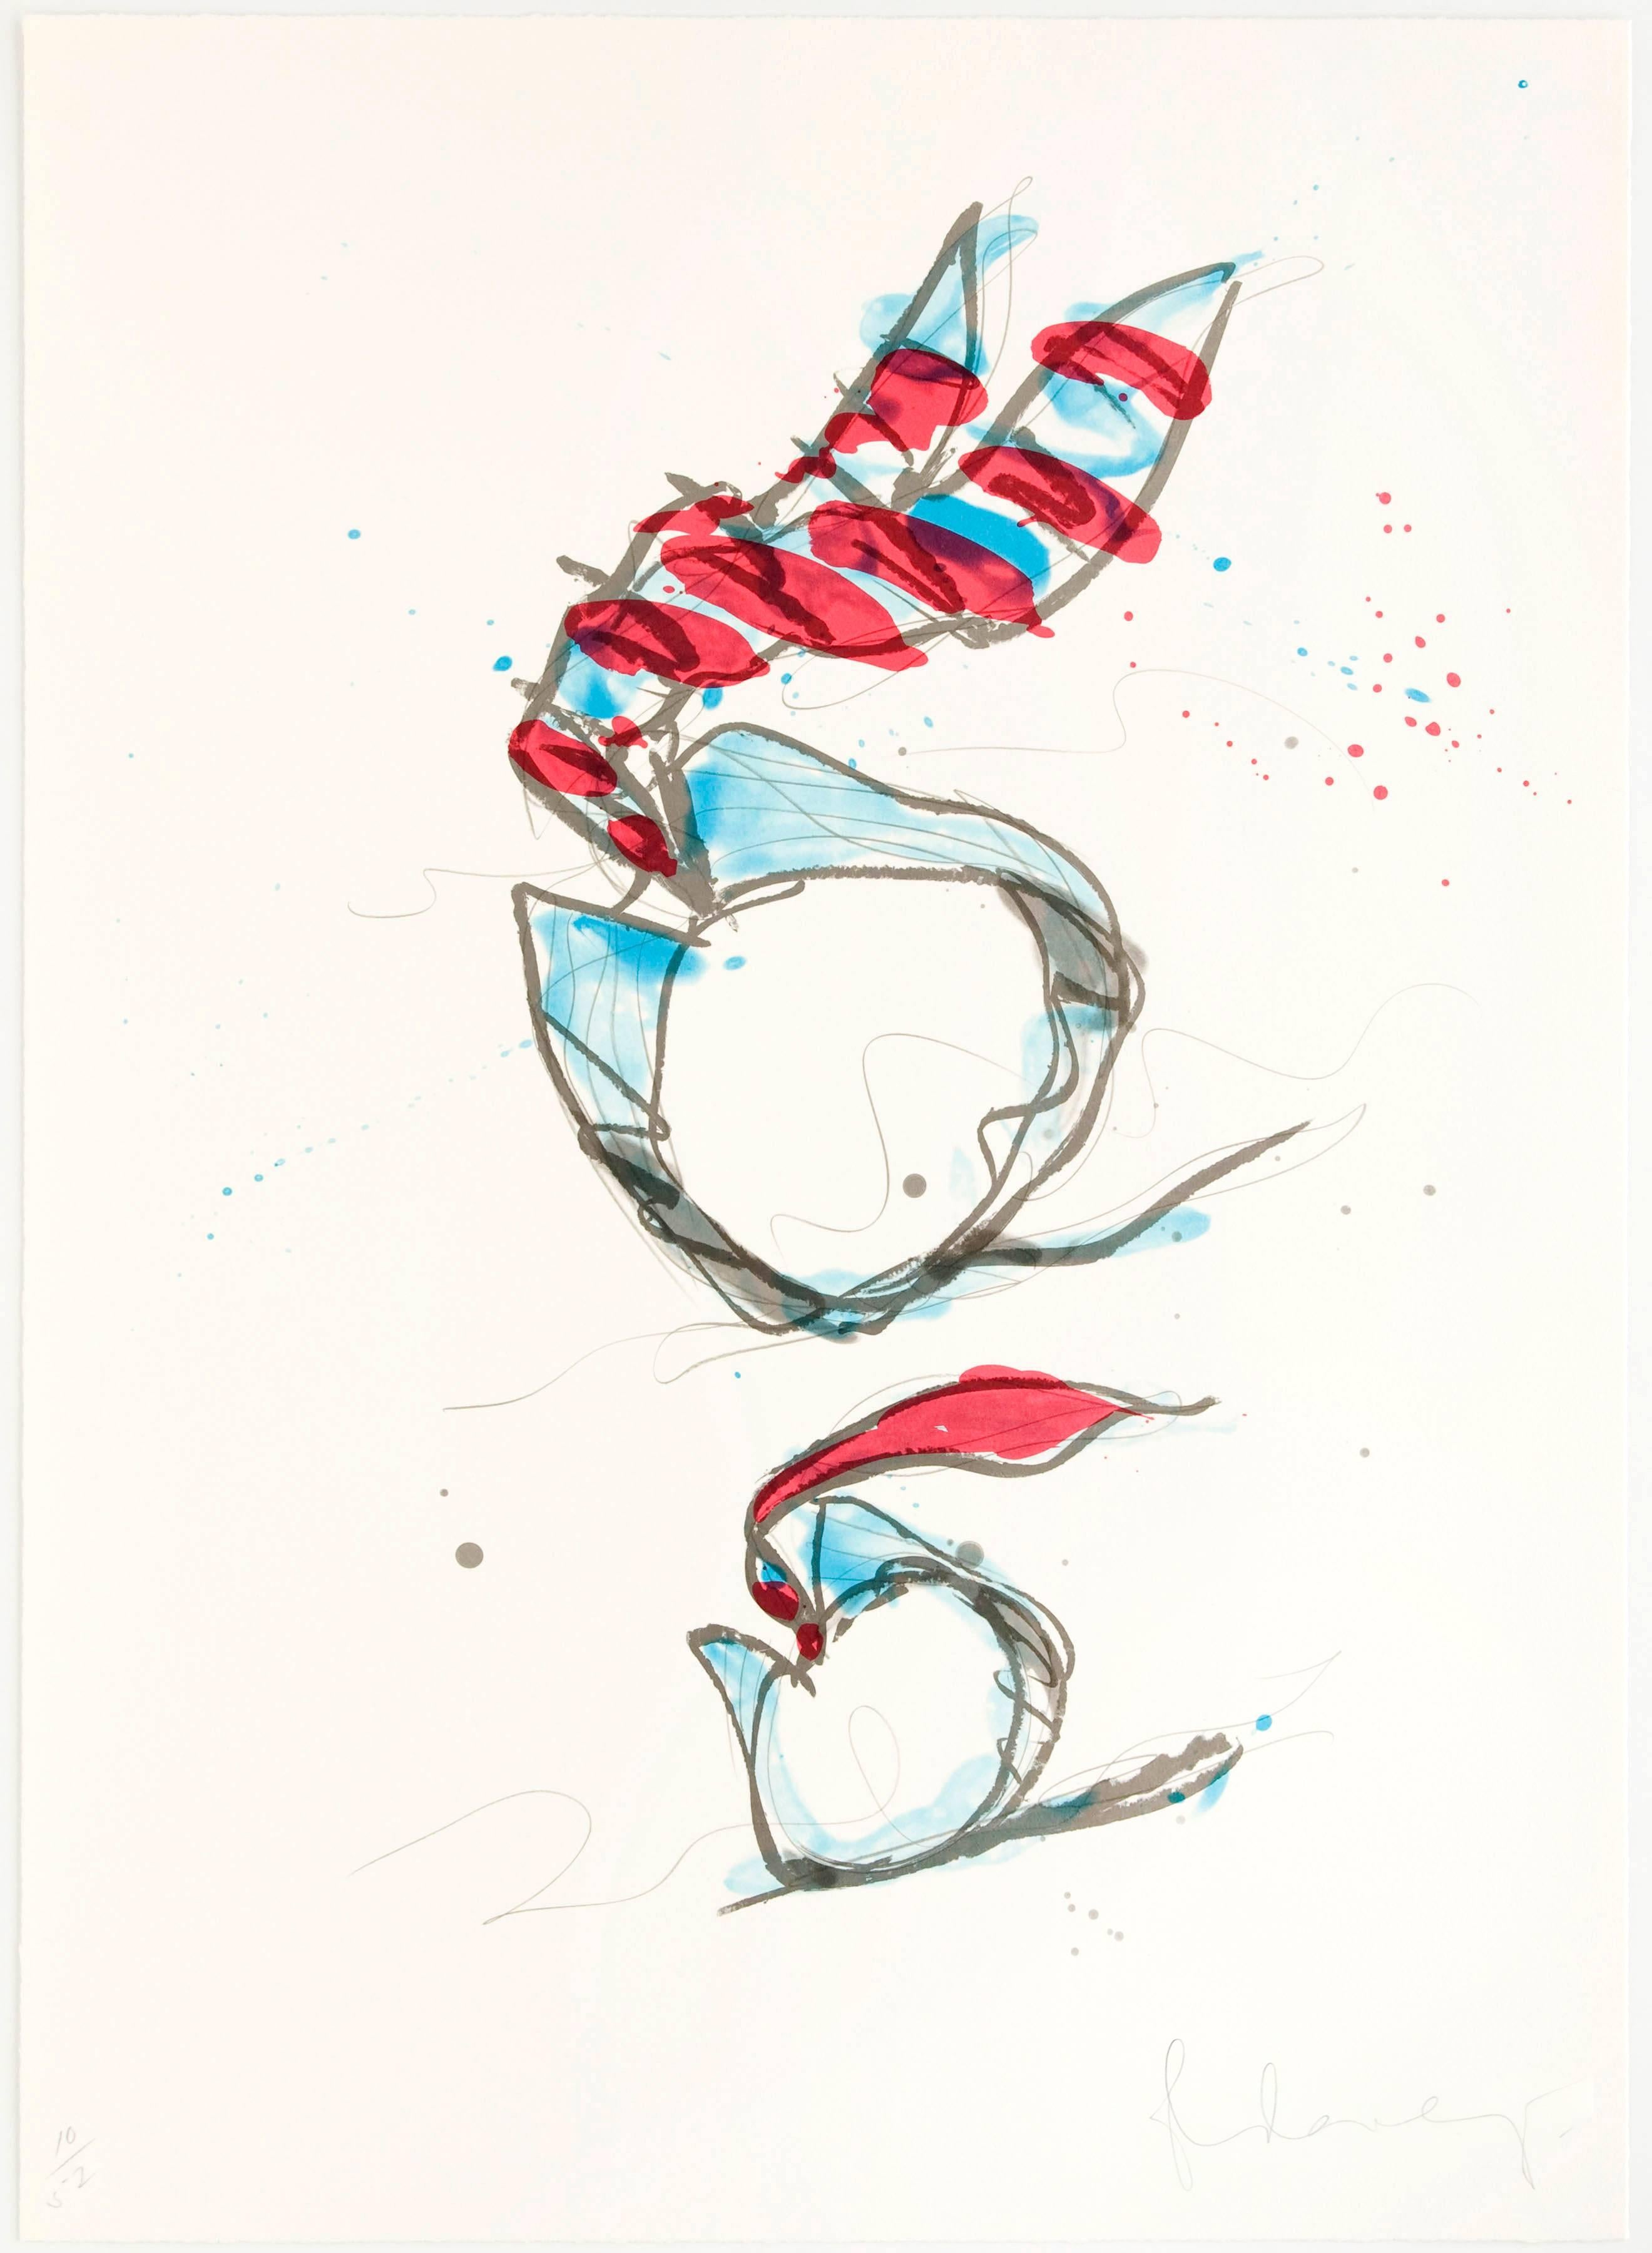 Claes Oldenburg Print - Rolling Collar and Tie